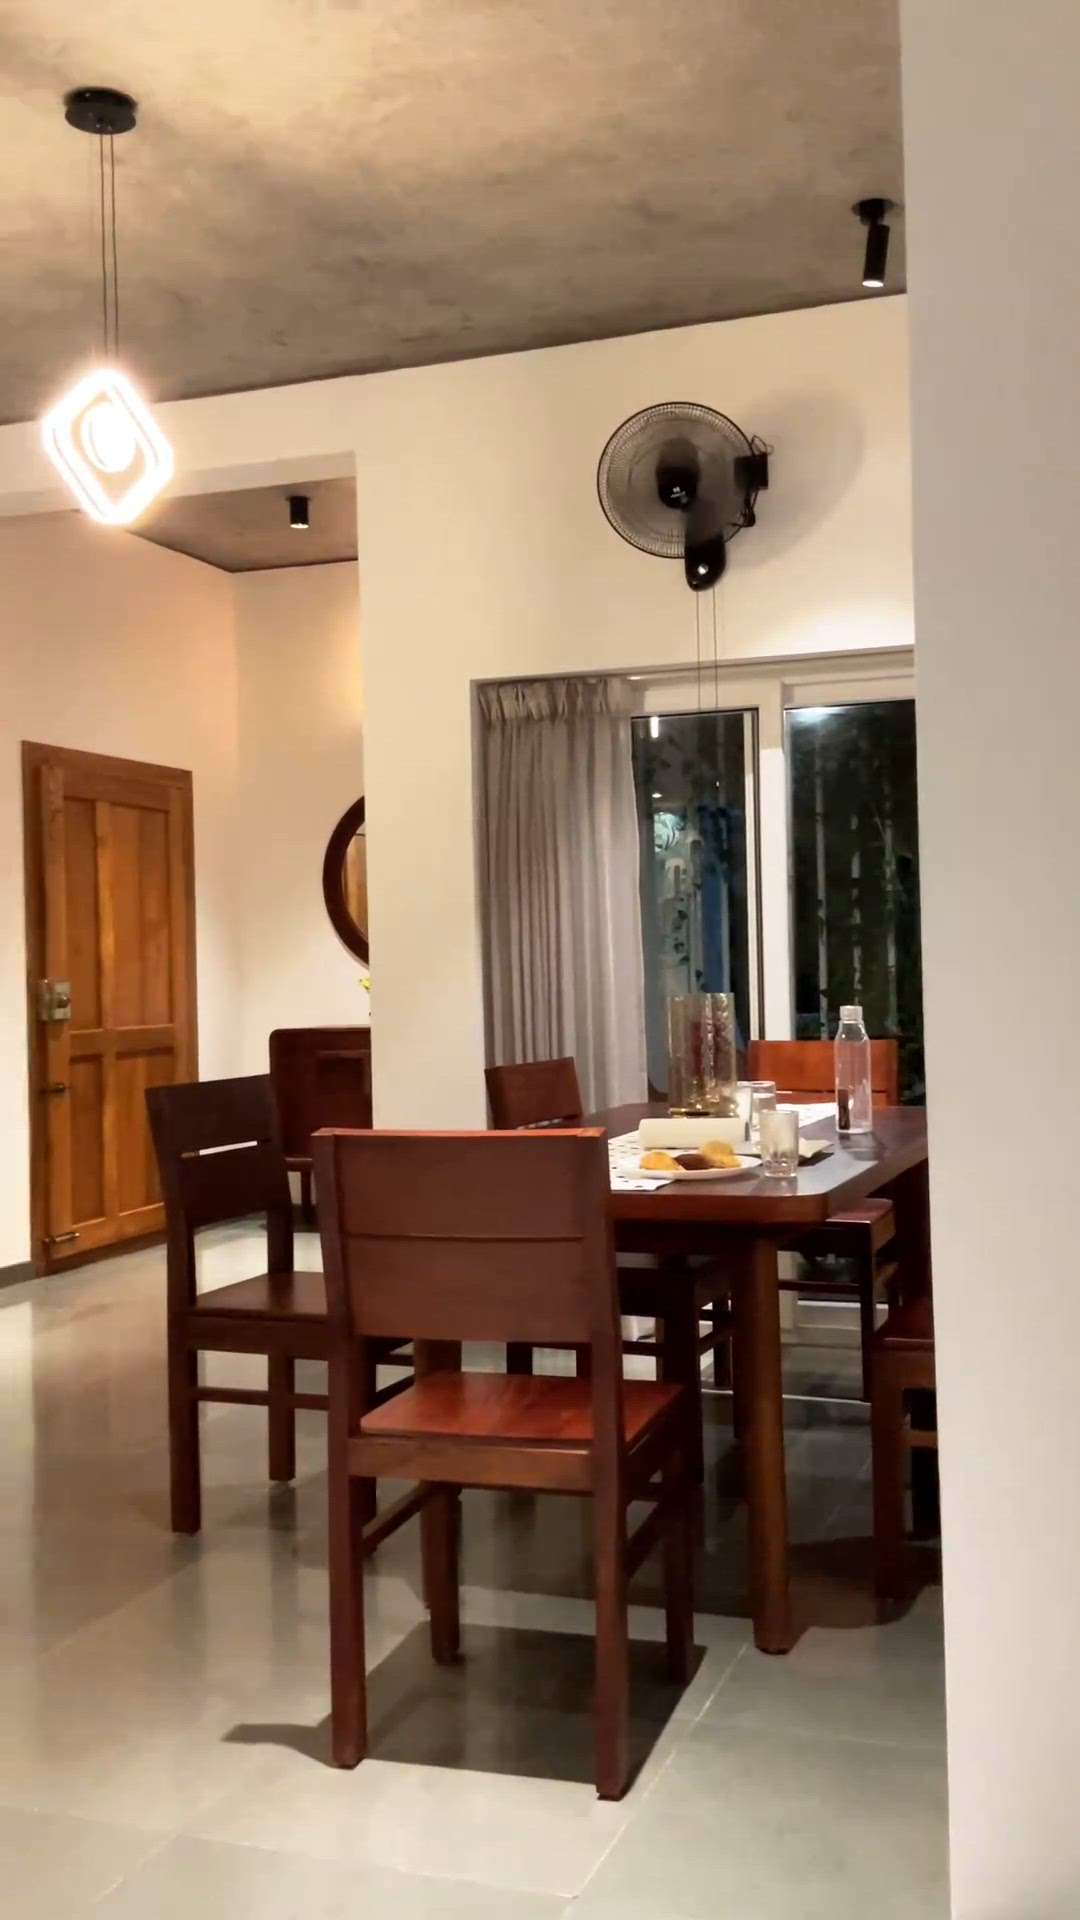 category: Residence 
Location: Trivandrum
Area: 2200sqft
Budget : Undisclosed
 #interior #Minimalistic #moderndesign #homeinterior #cozyhome #elegantdesign